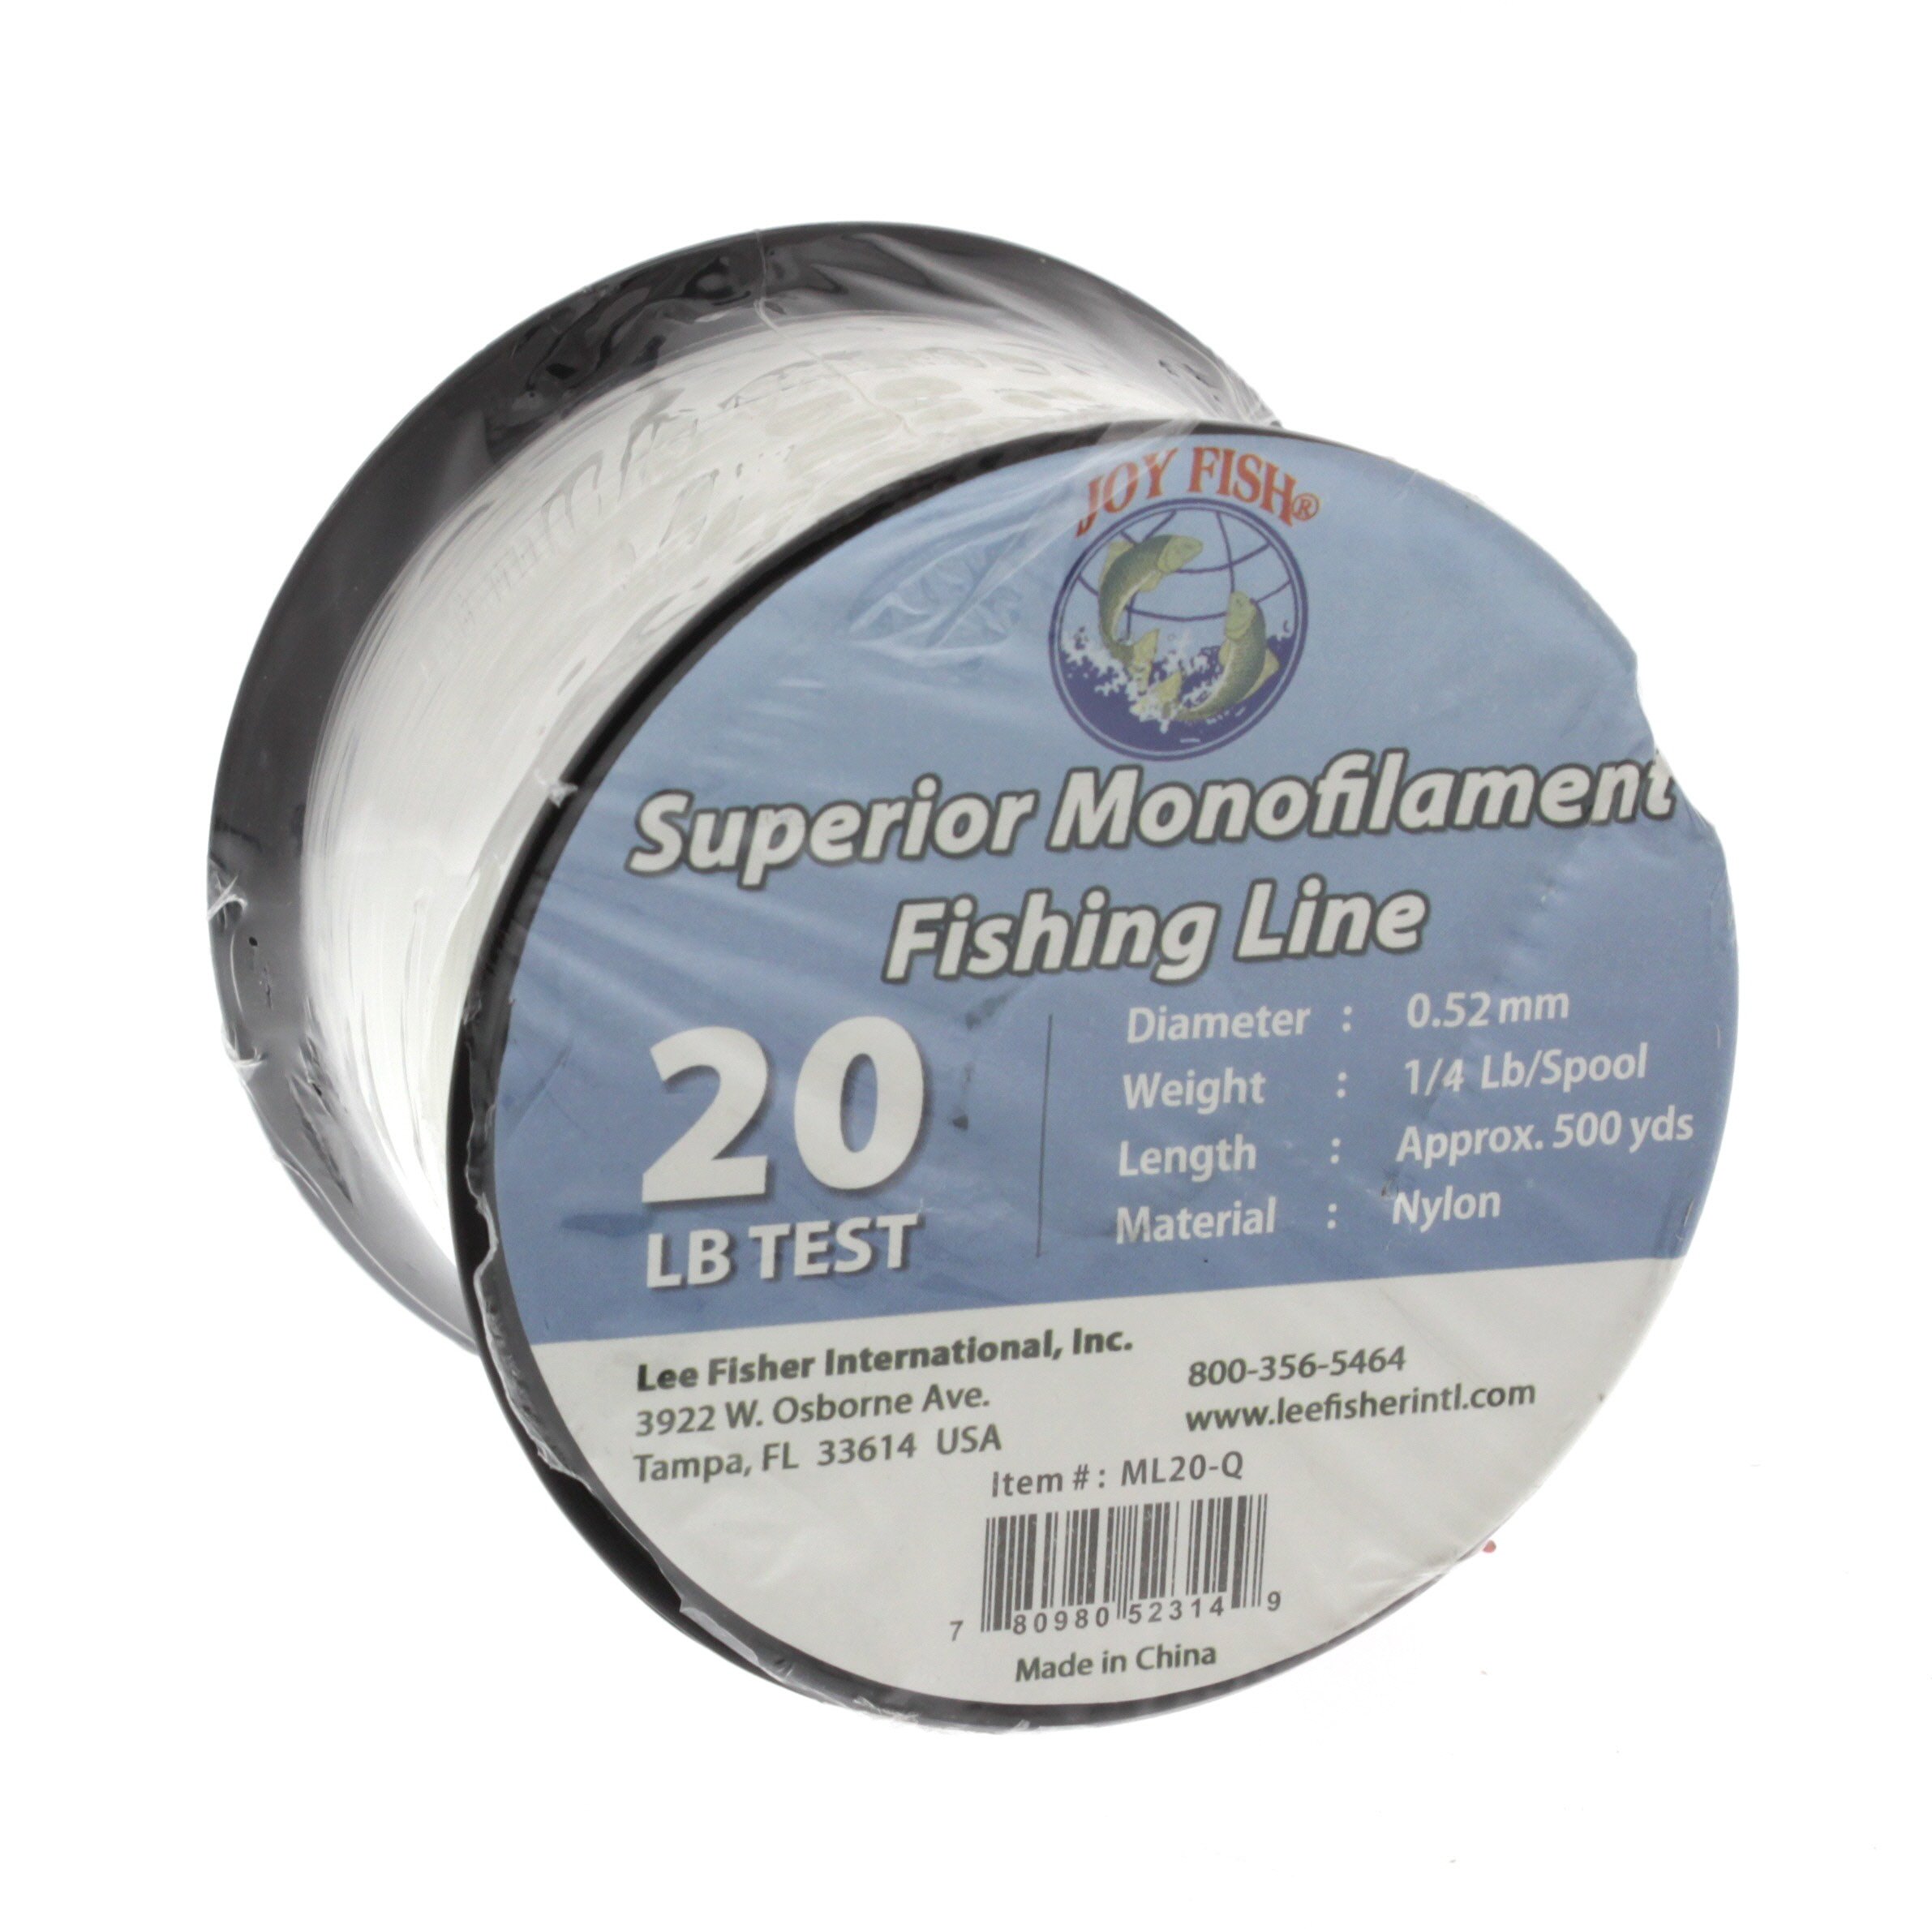 Lee Fisher Joy Fish Spool Monofilament Fishing Line, 80 lb, Clear